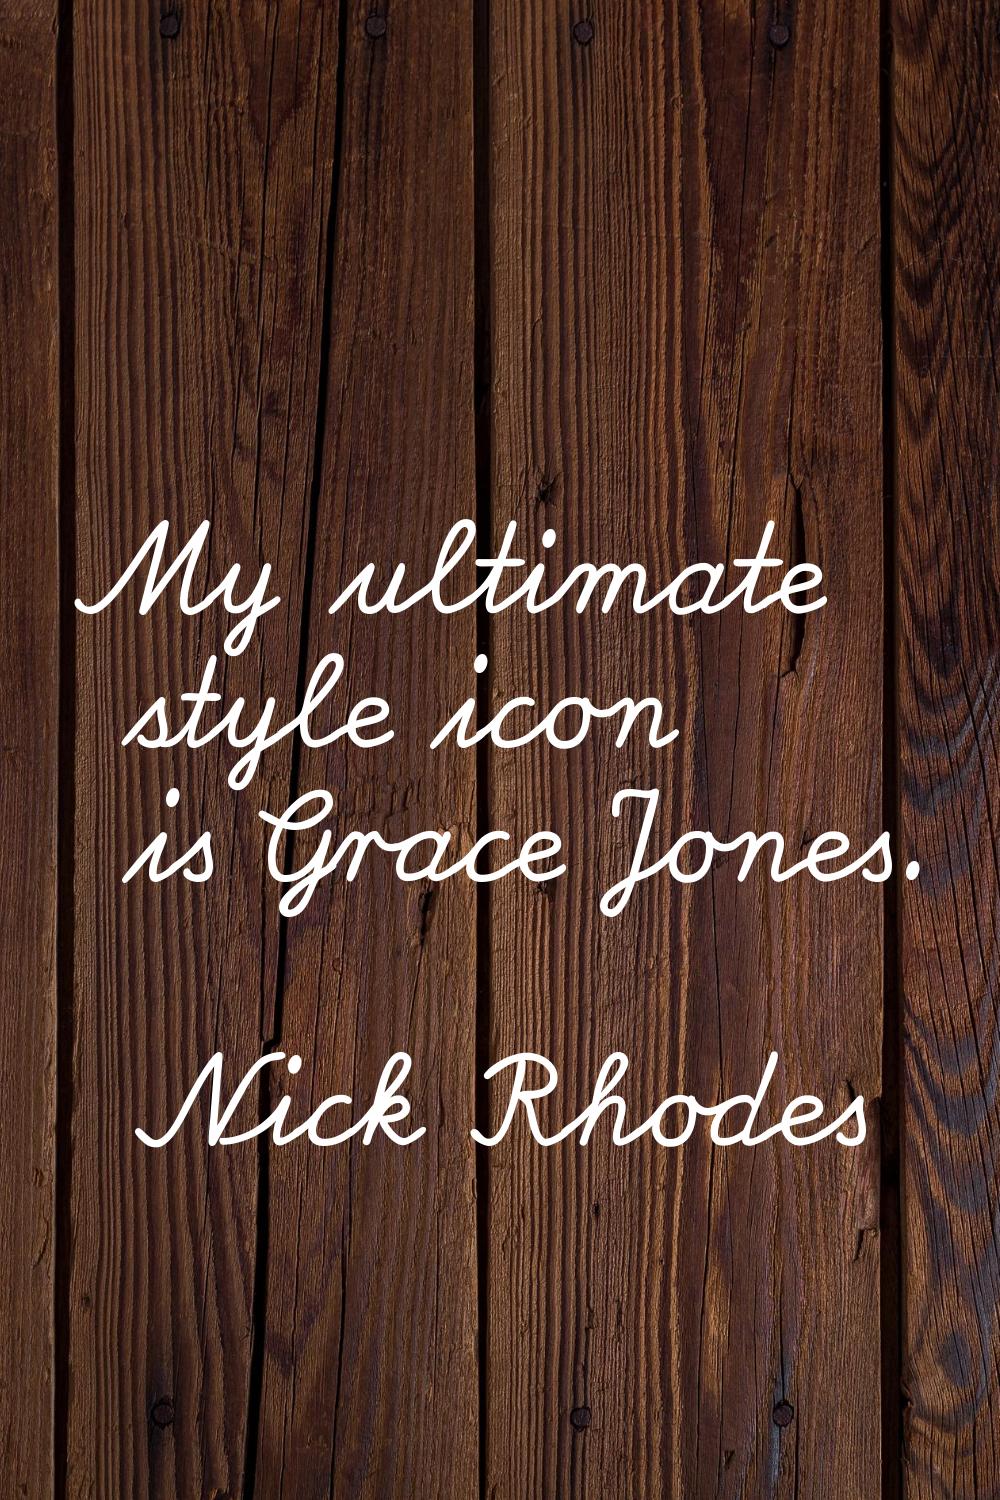 My ultimate style icon is Grace Jones.